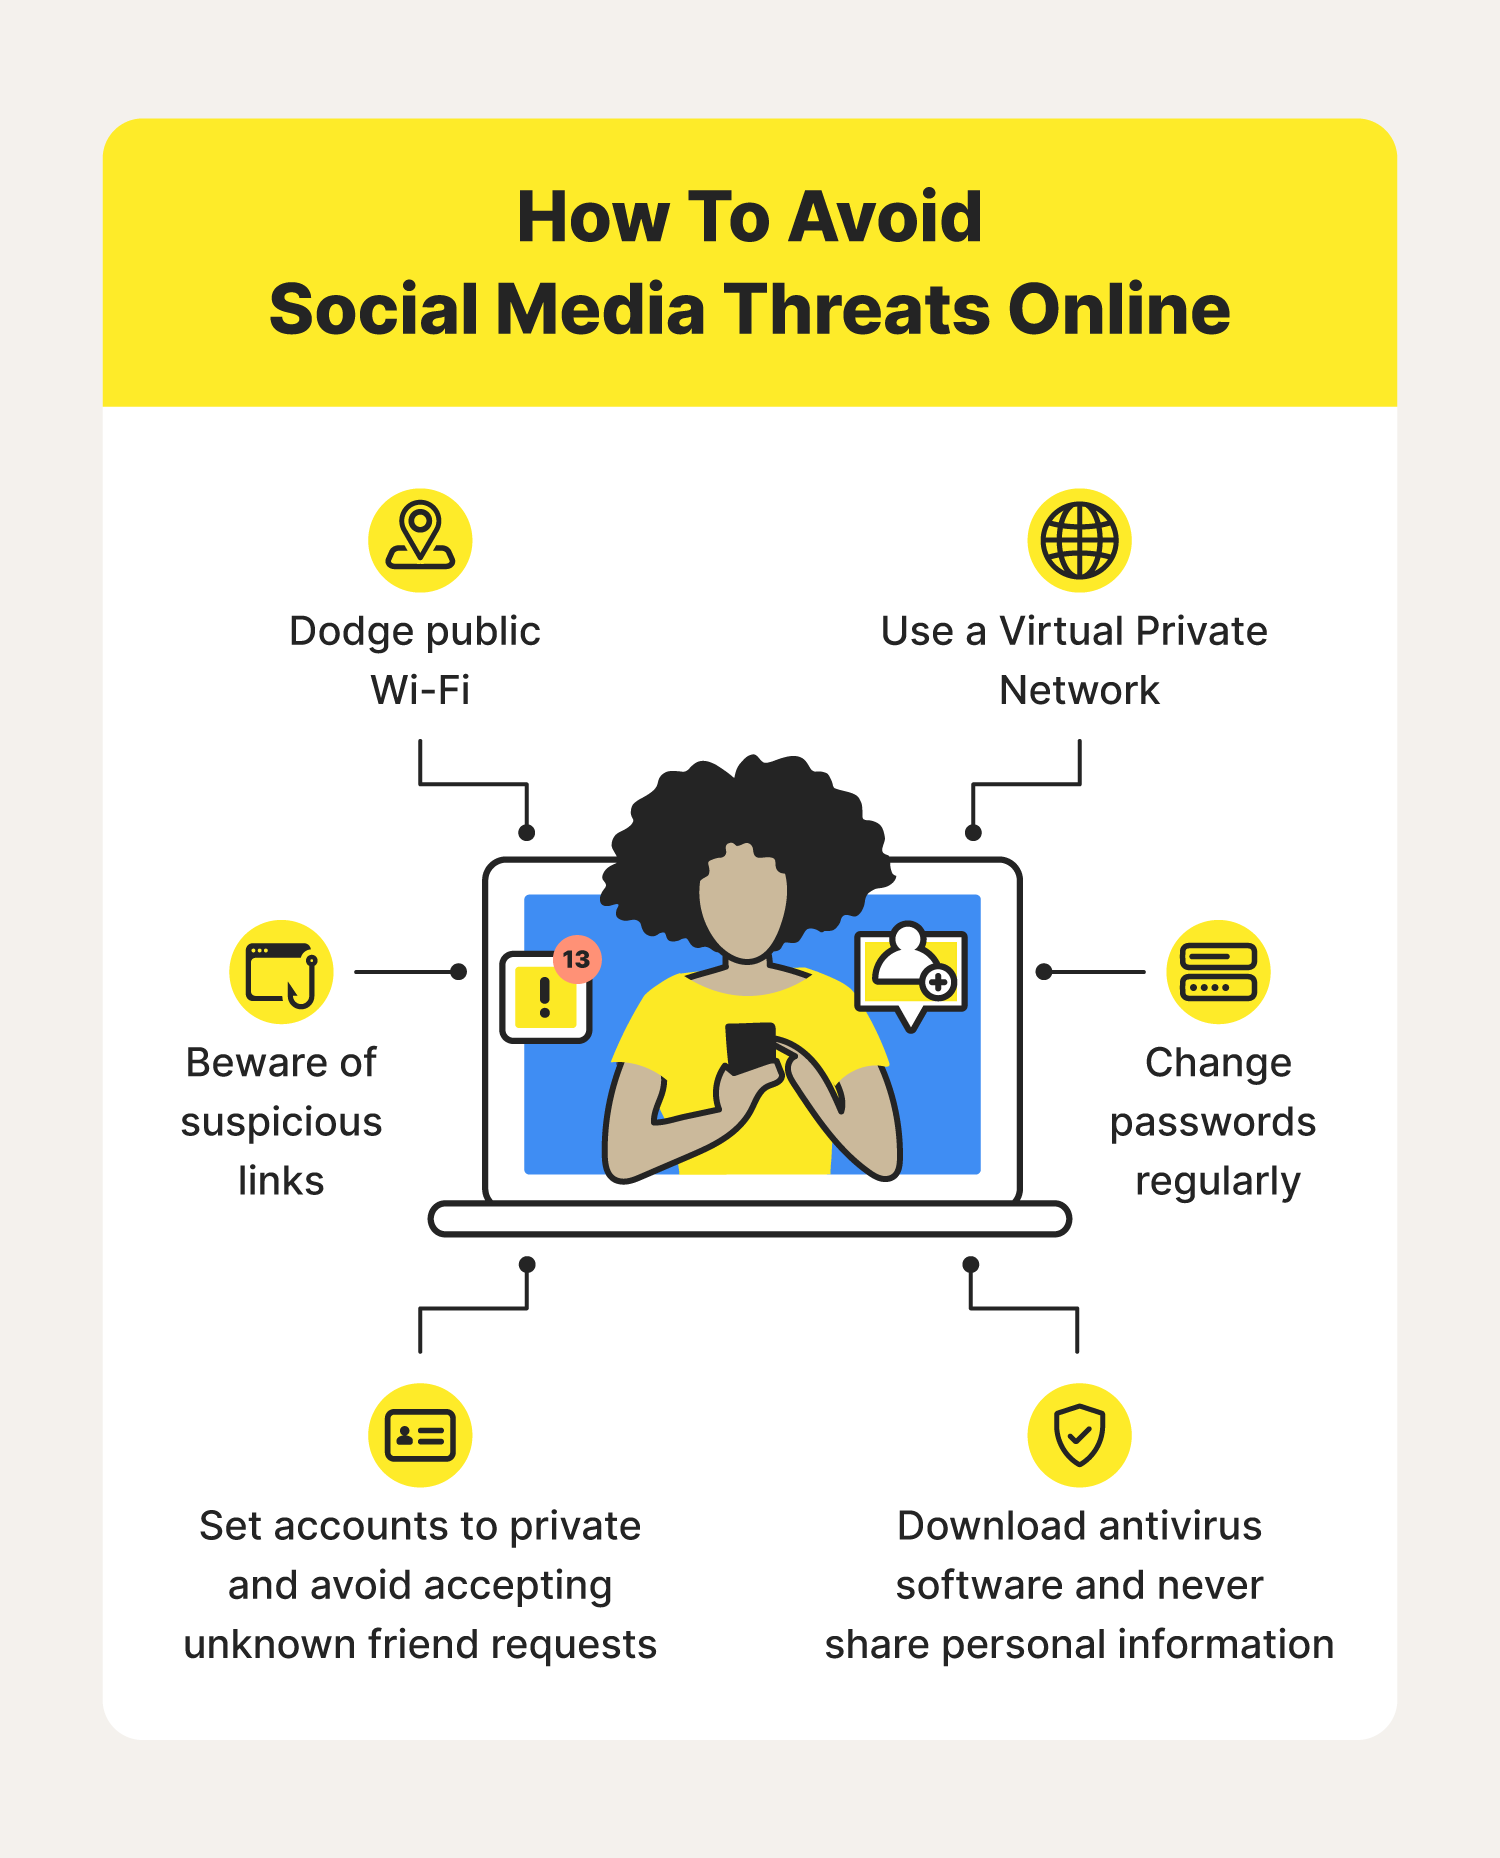 Six illustrations help breakdown how to avoid social media threats online. 